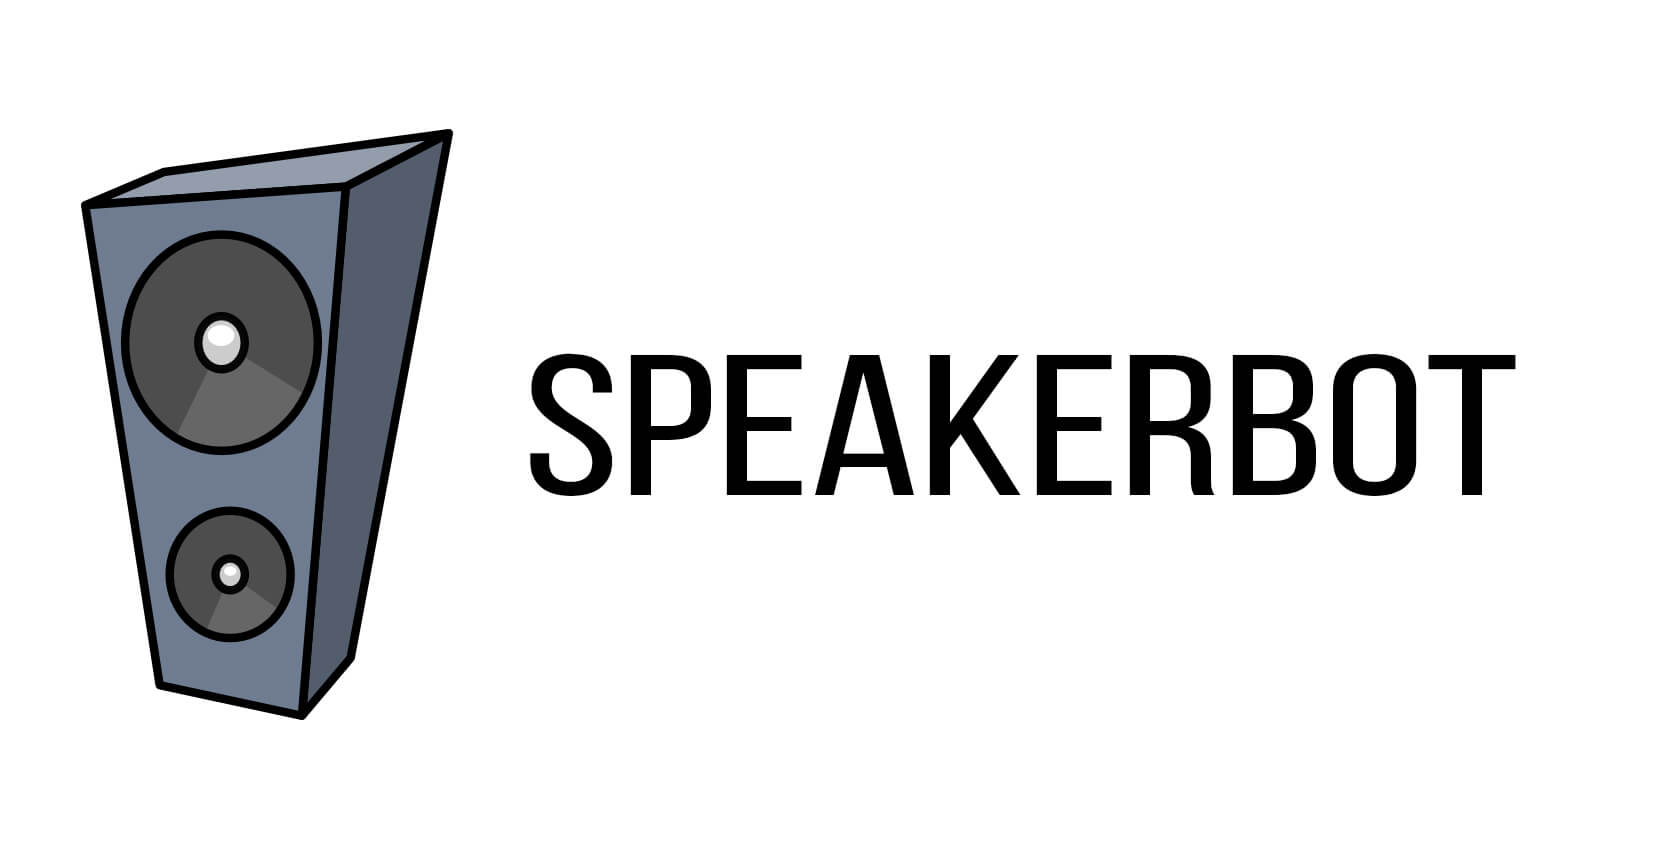 Speakerbot